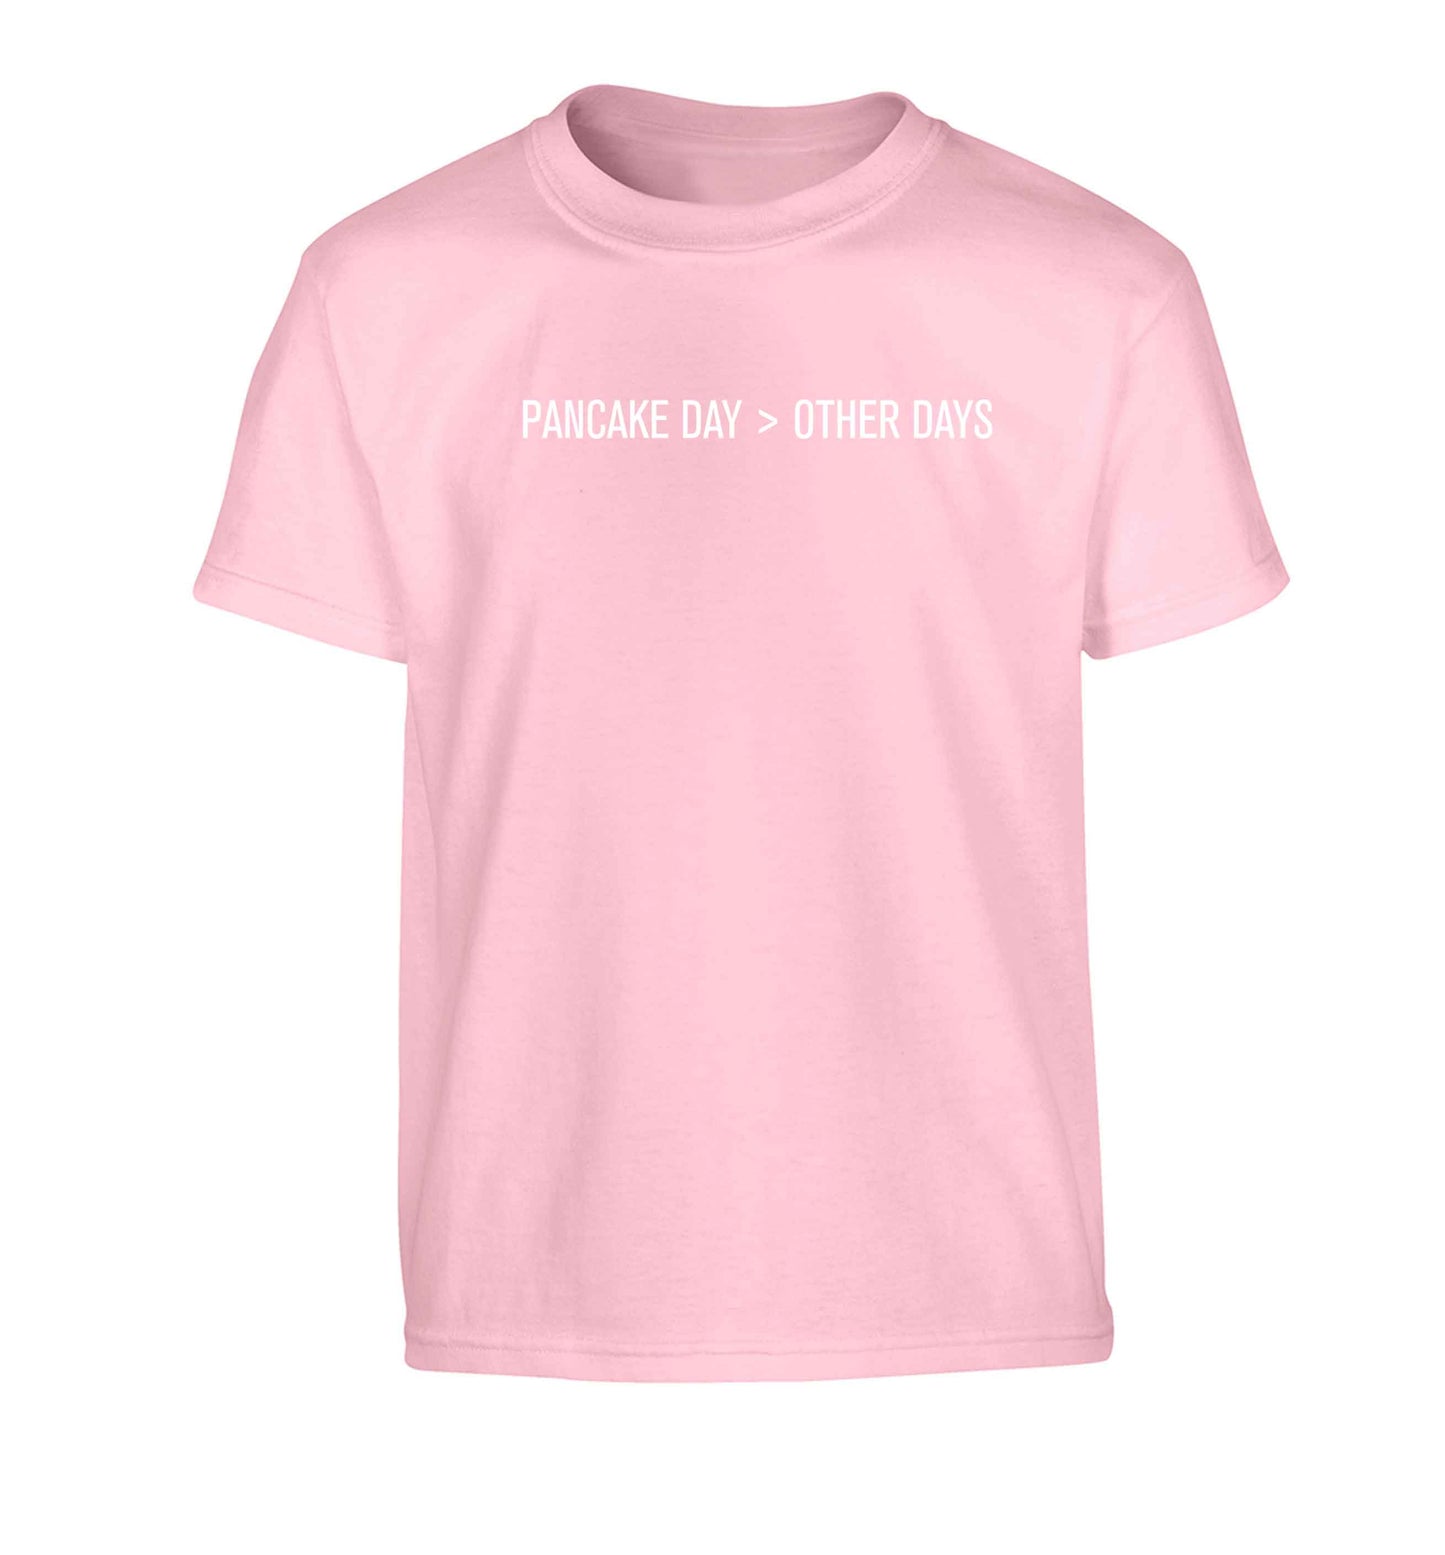 Pancake day > other days Children's light pink Tshirt 12-13 Years